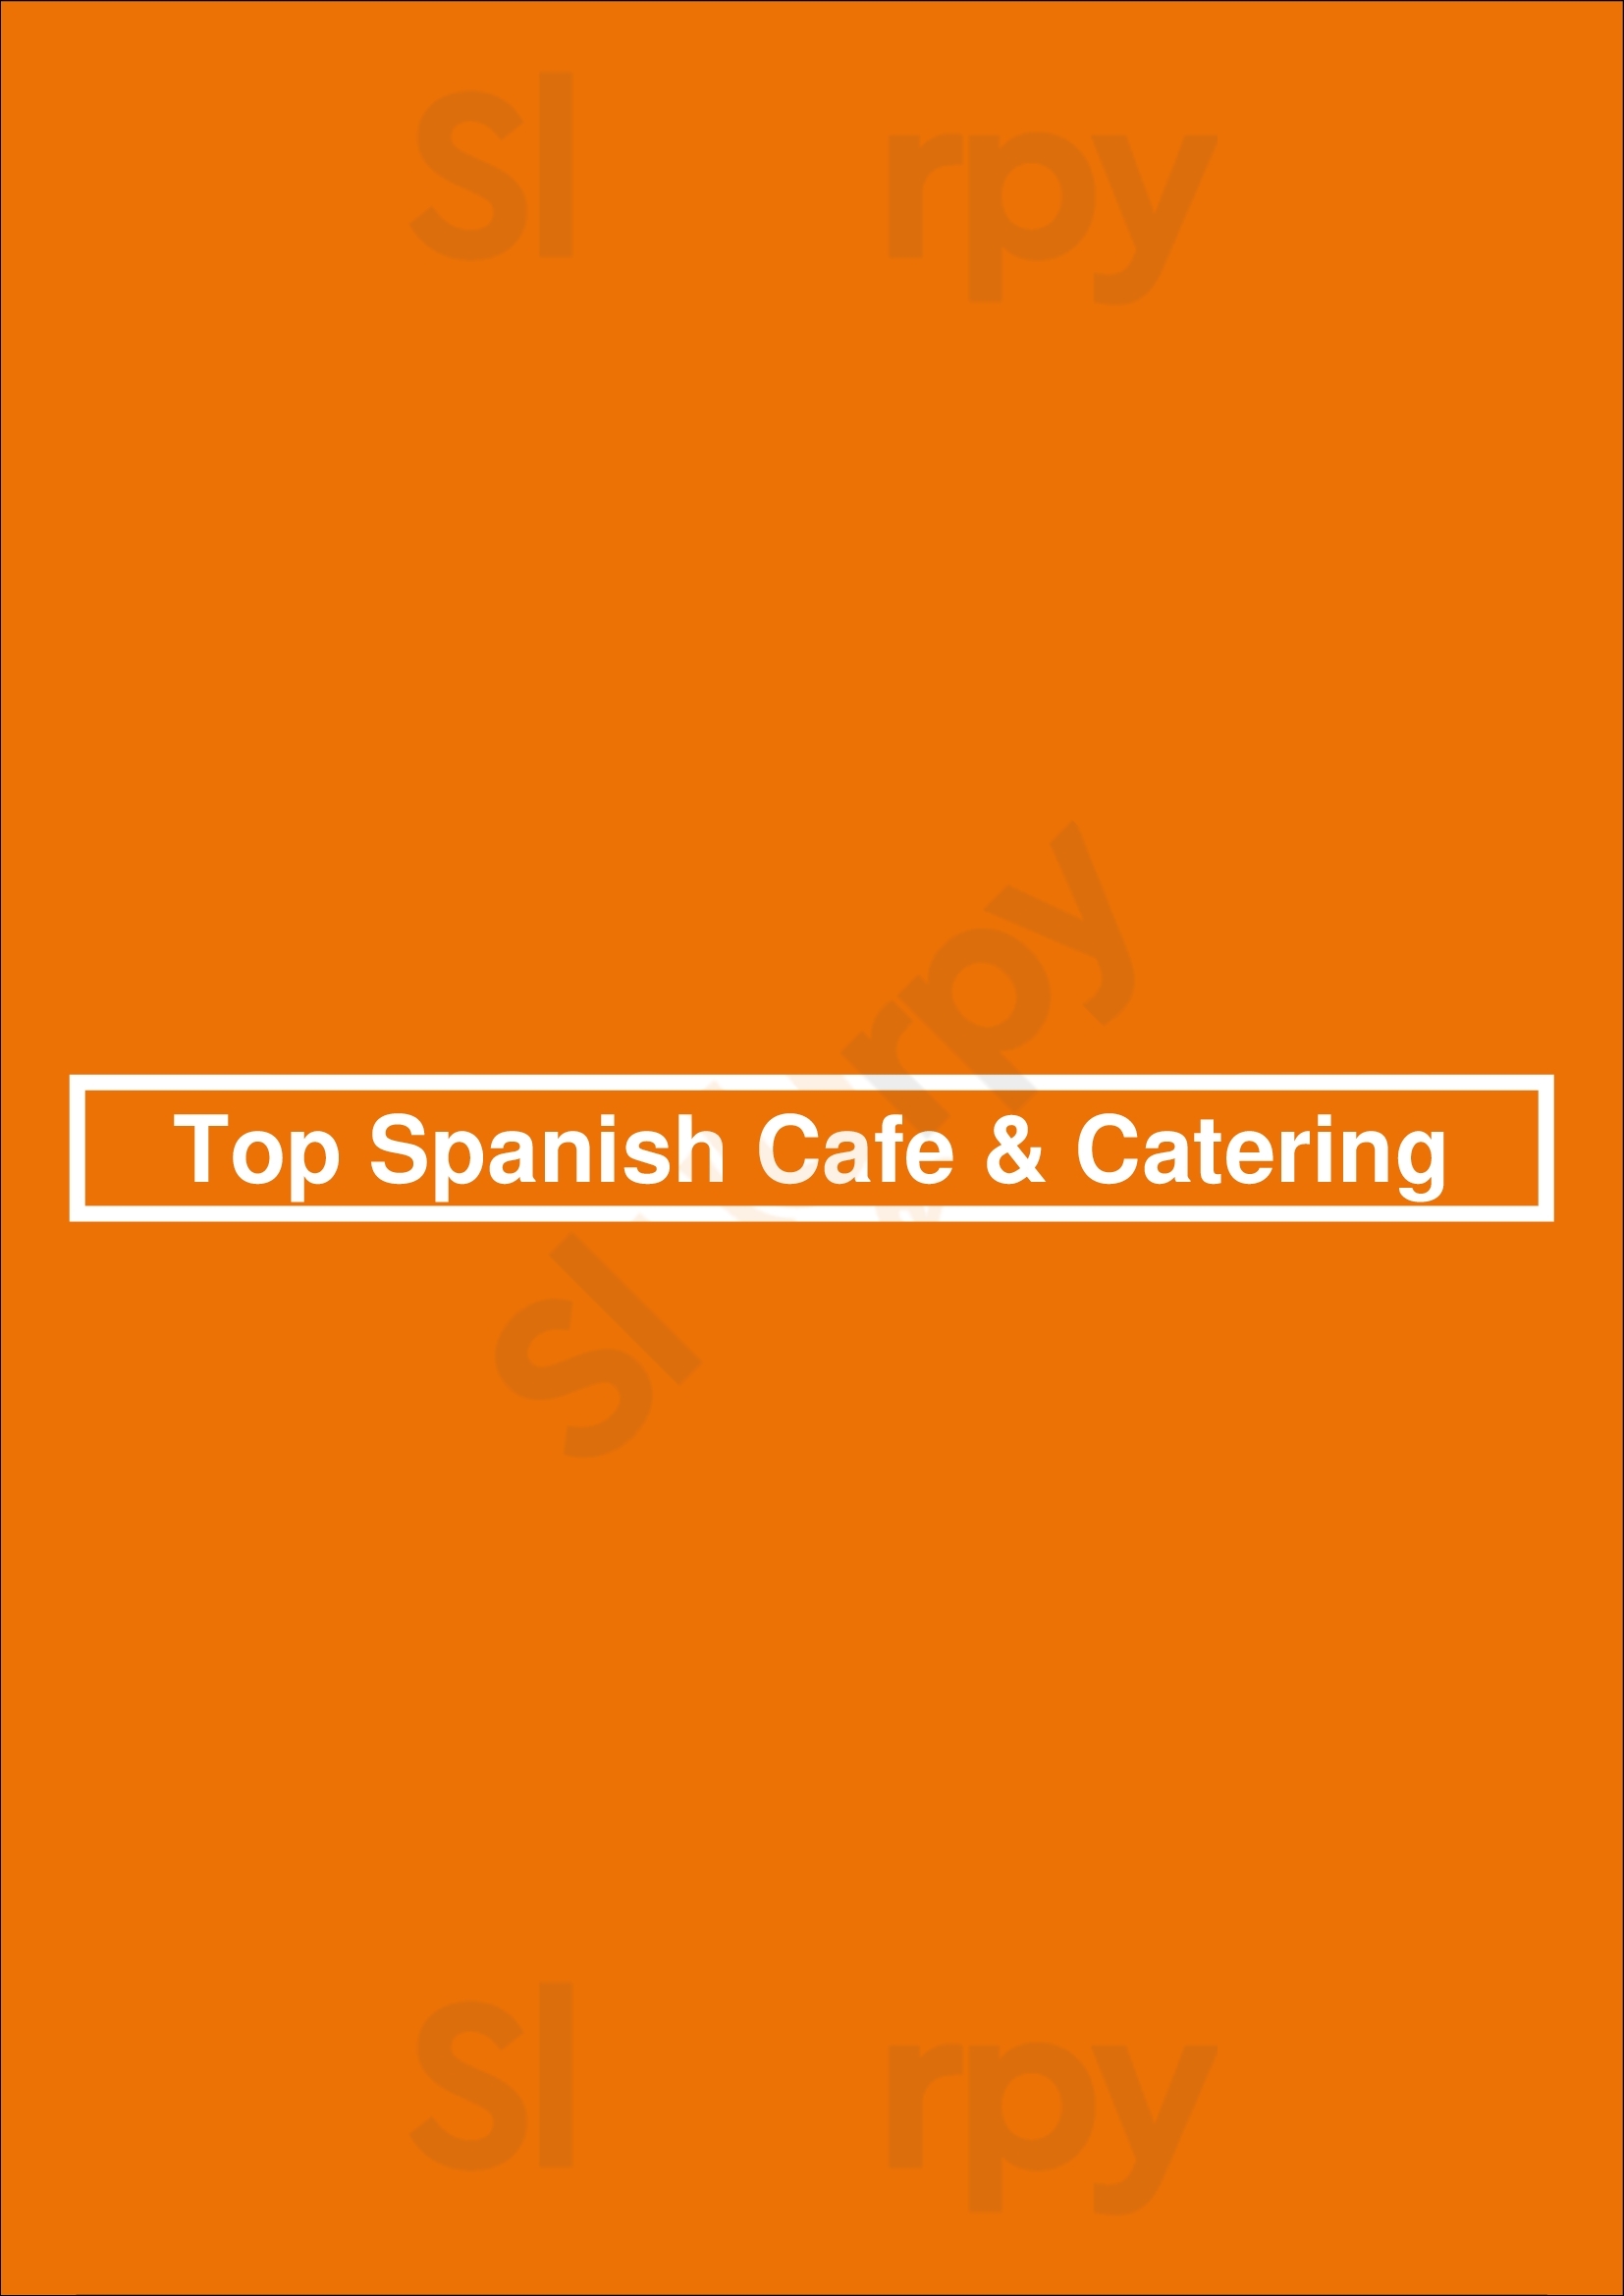 Top Spanish Cafe & Catering Washington DC Menu - 1